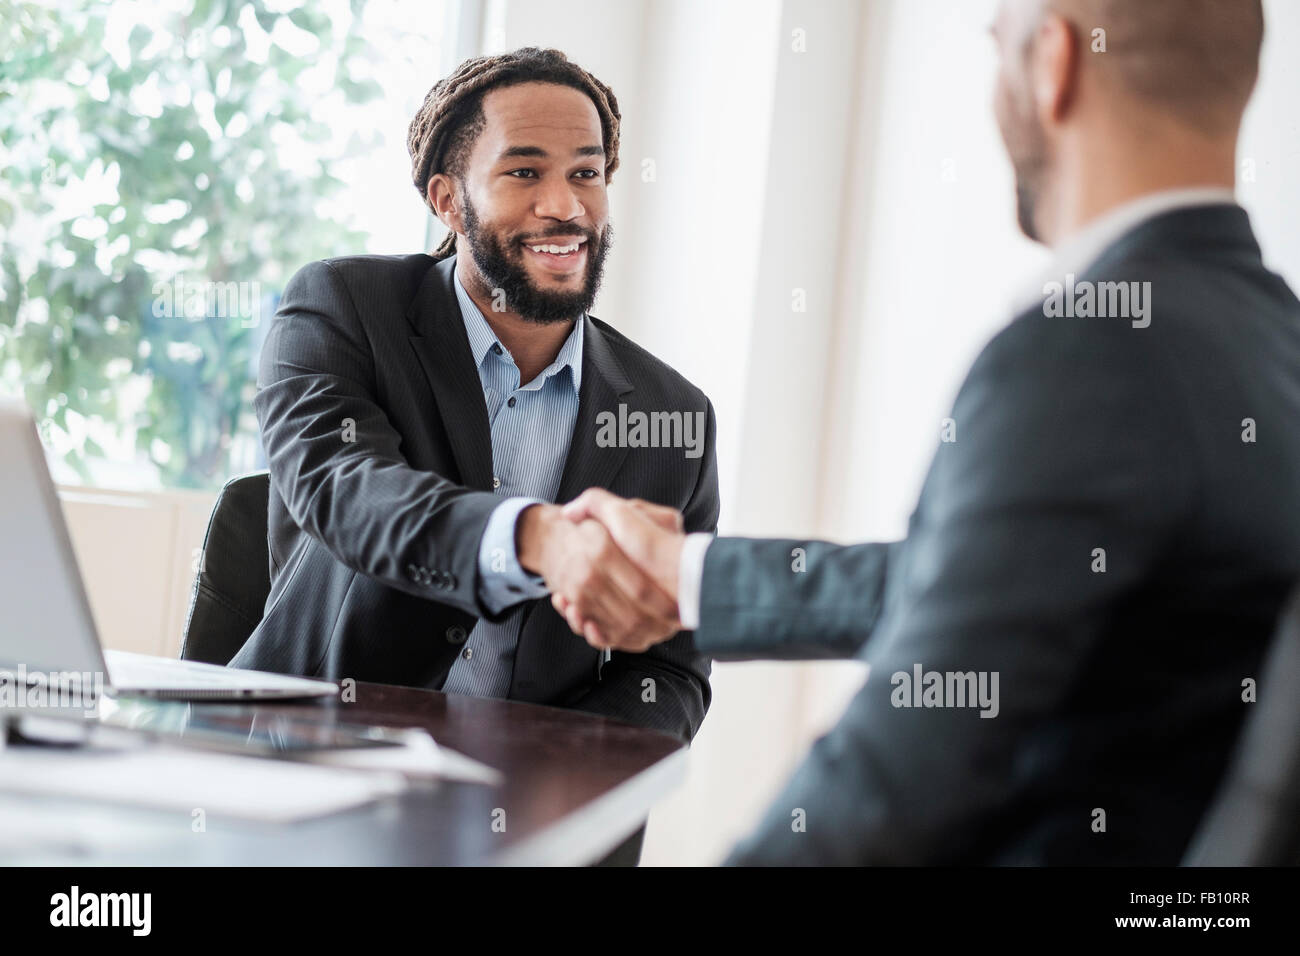 Smiling businessmen shaking hands in office Banque D'Images